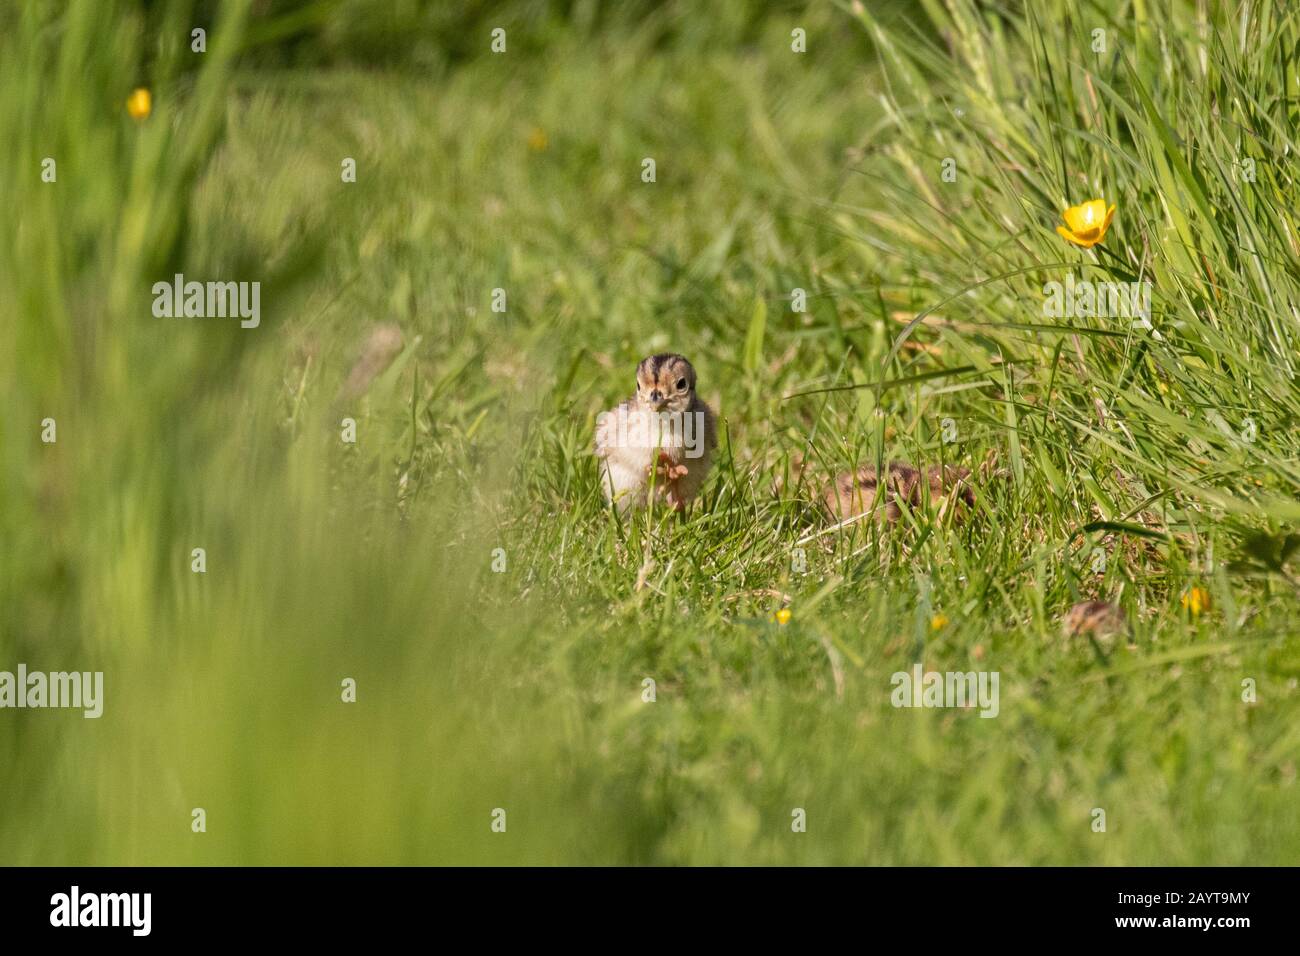 A baby pheasant running through long lush green grass Stock Photo